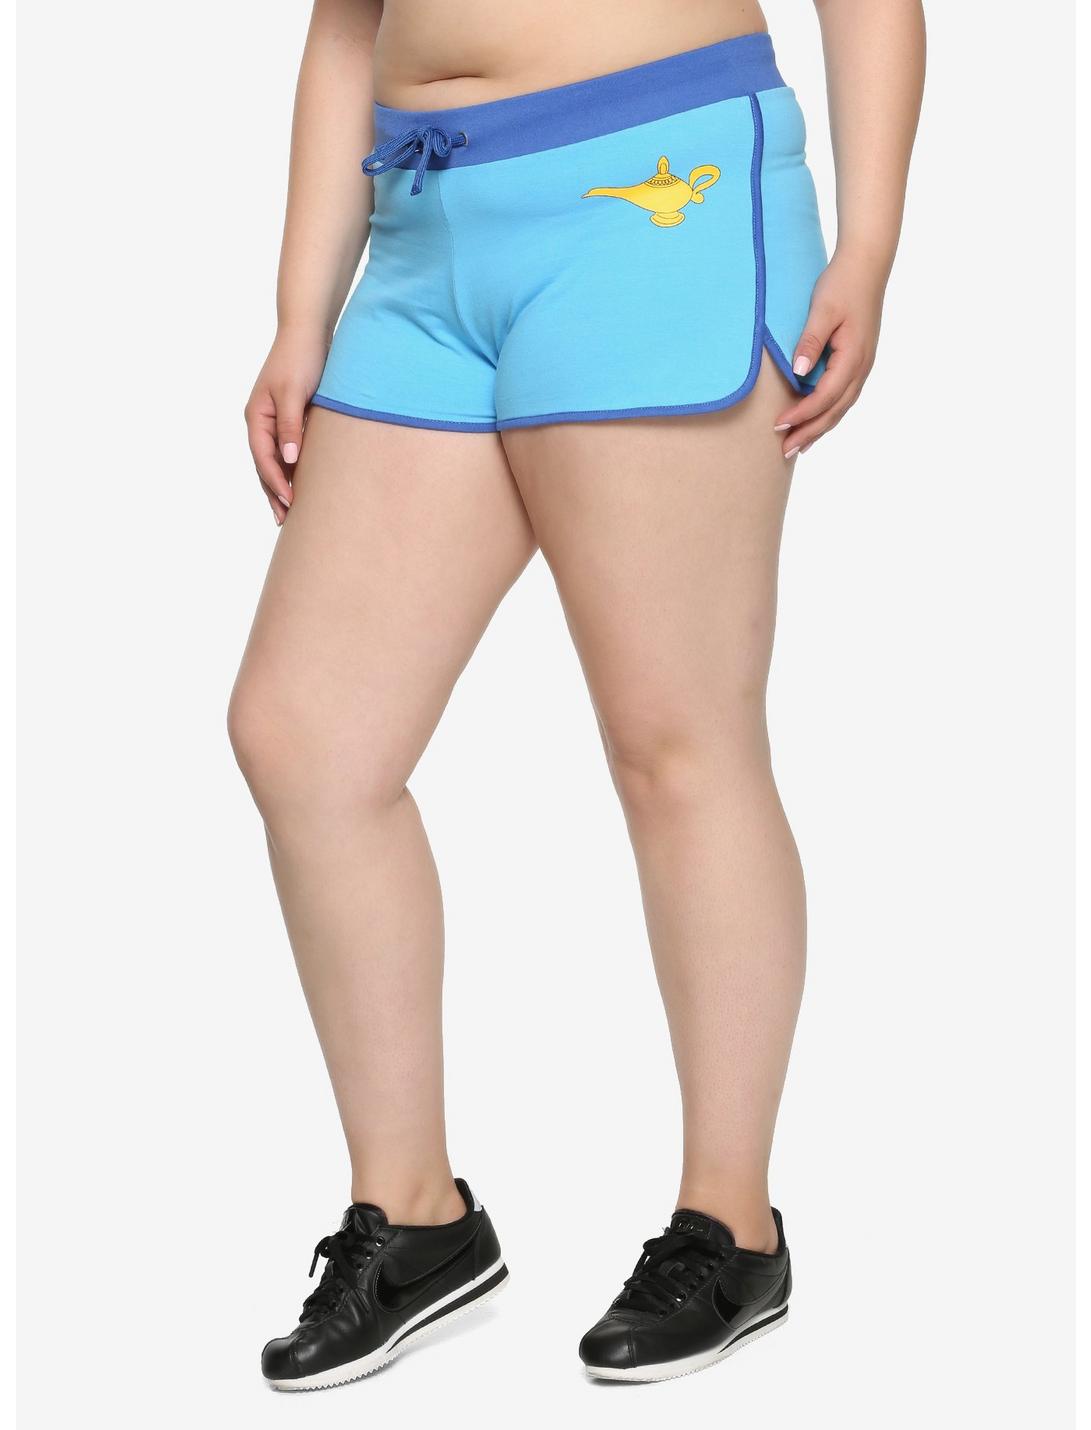 Disney Aladdin Genie Lamp Girls Soft Shorts Plus Size, BLUE, hi-res